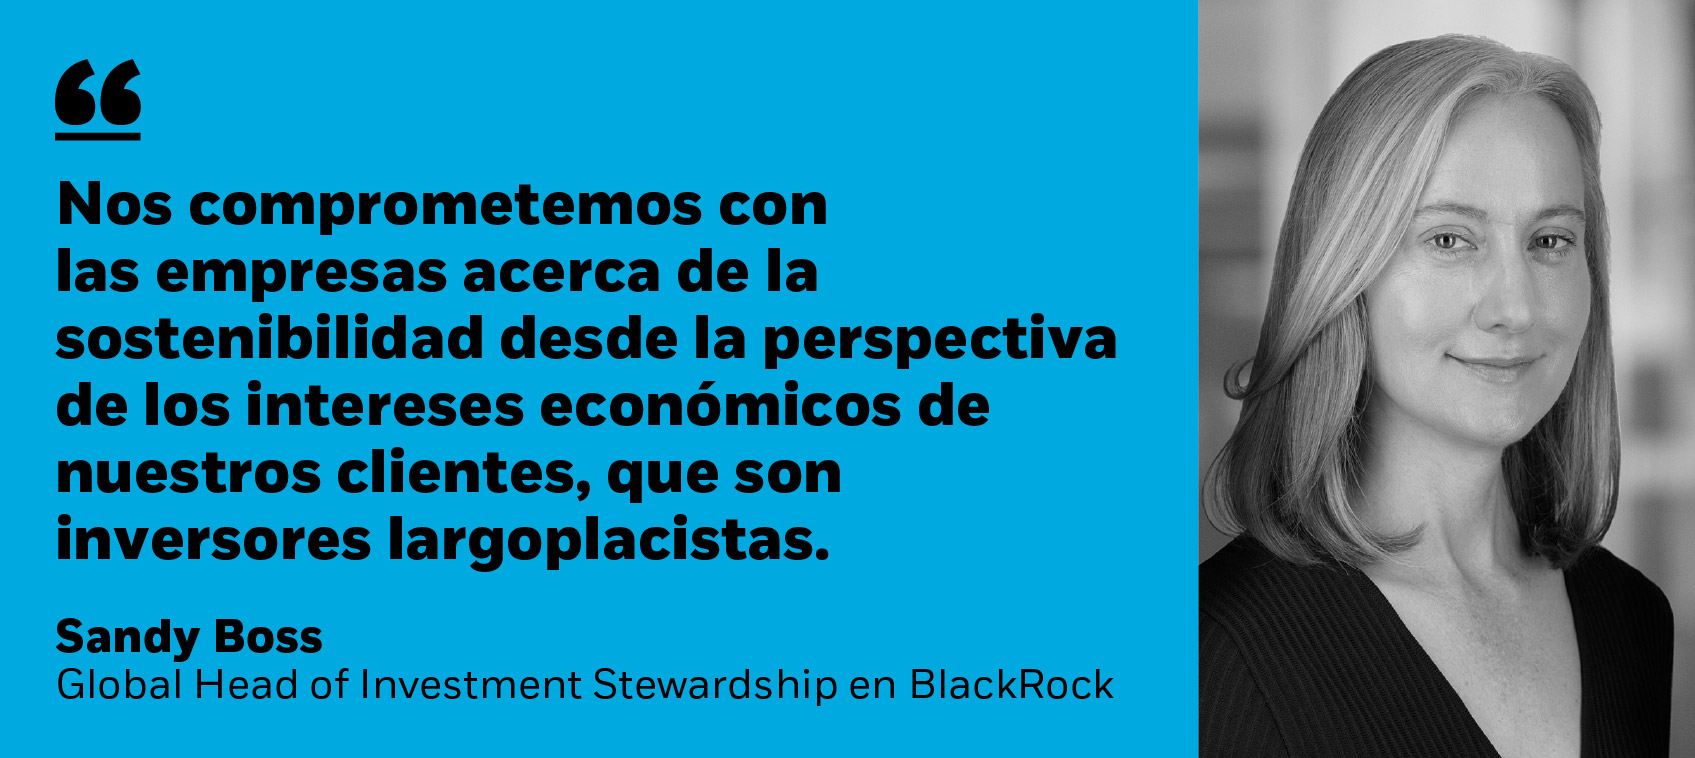 Sandy Boss, Global Head of Investment Stewardship en BlackRock